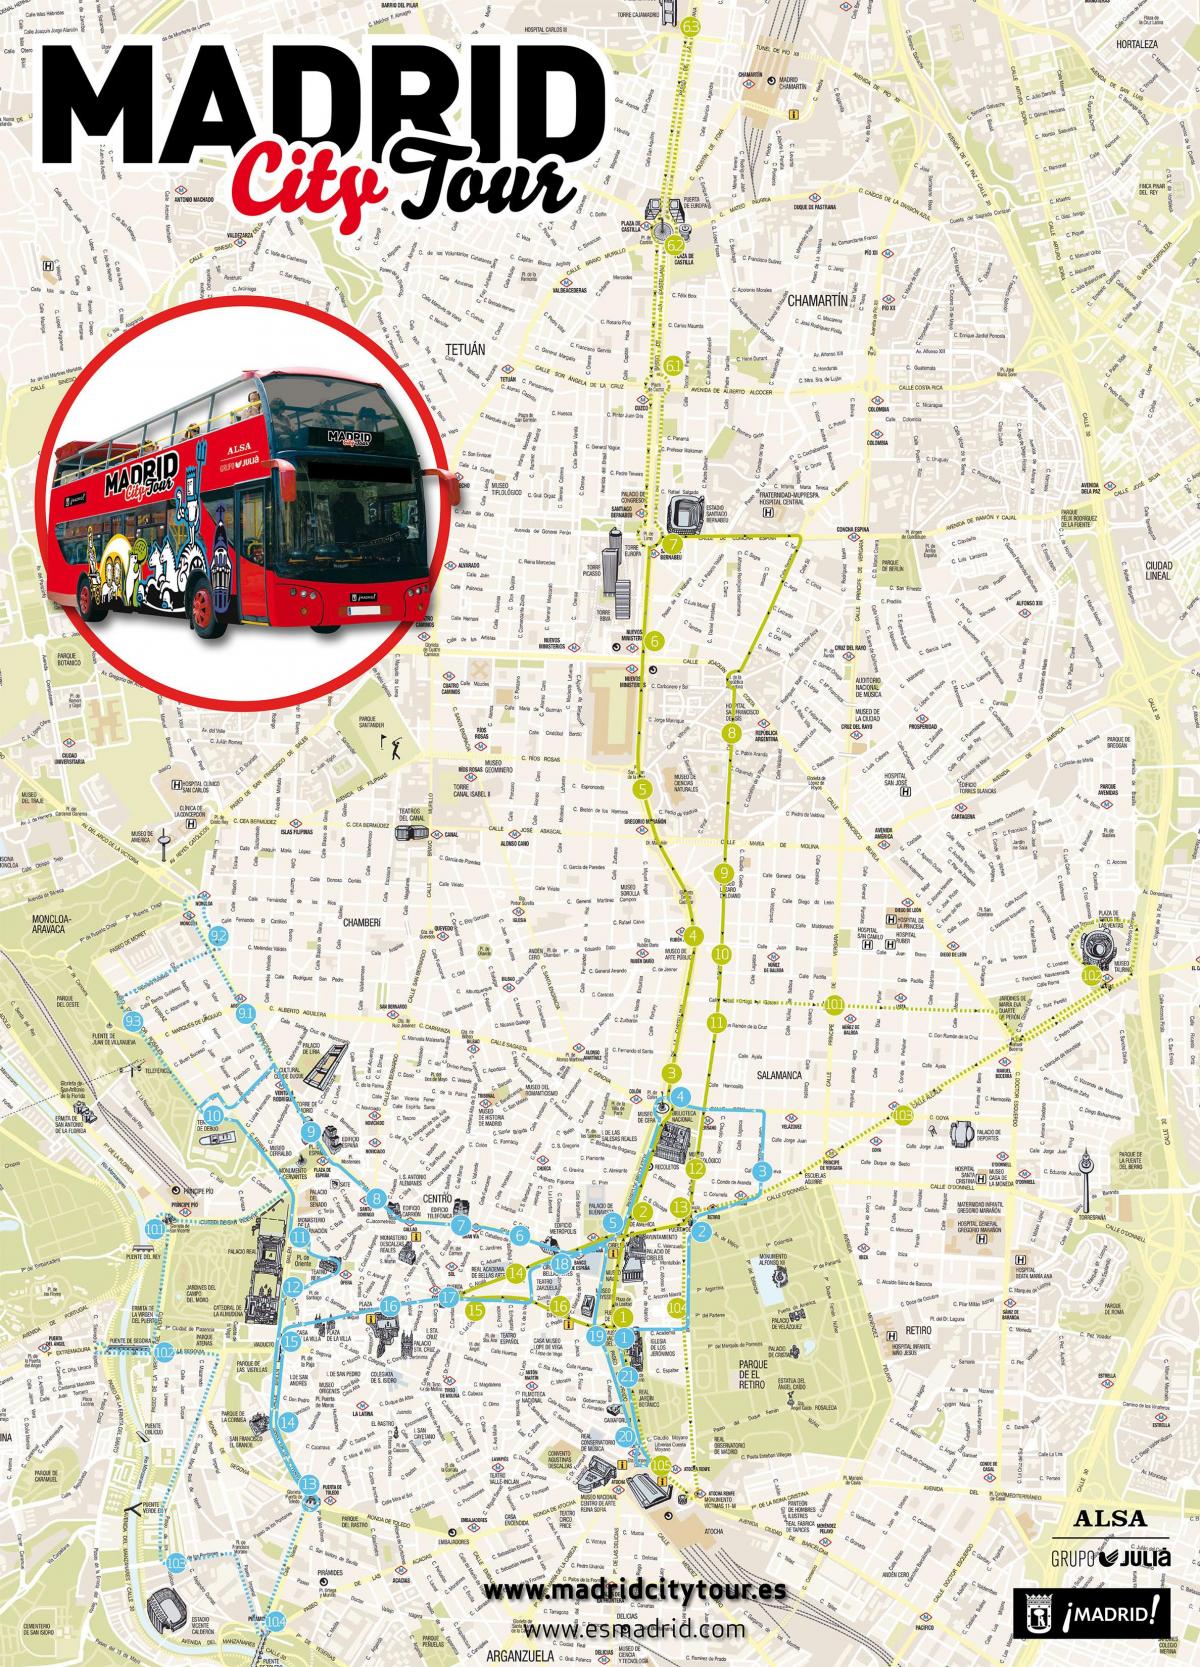 Madrid city bus tour χάρτης